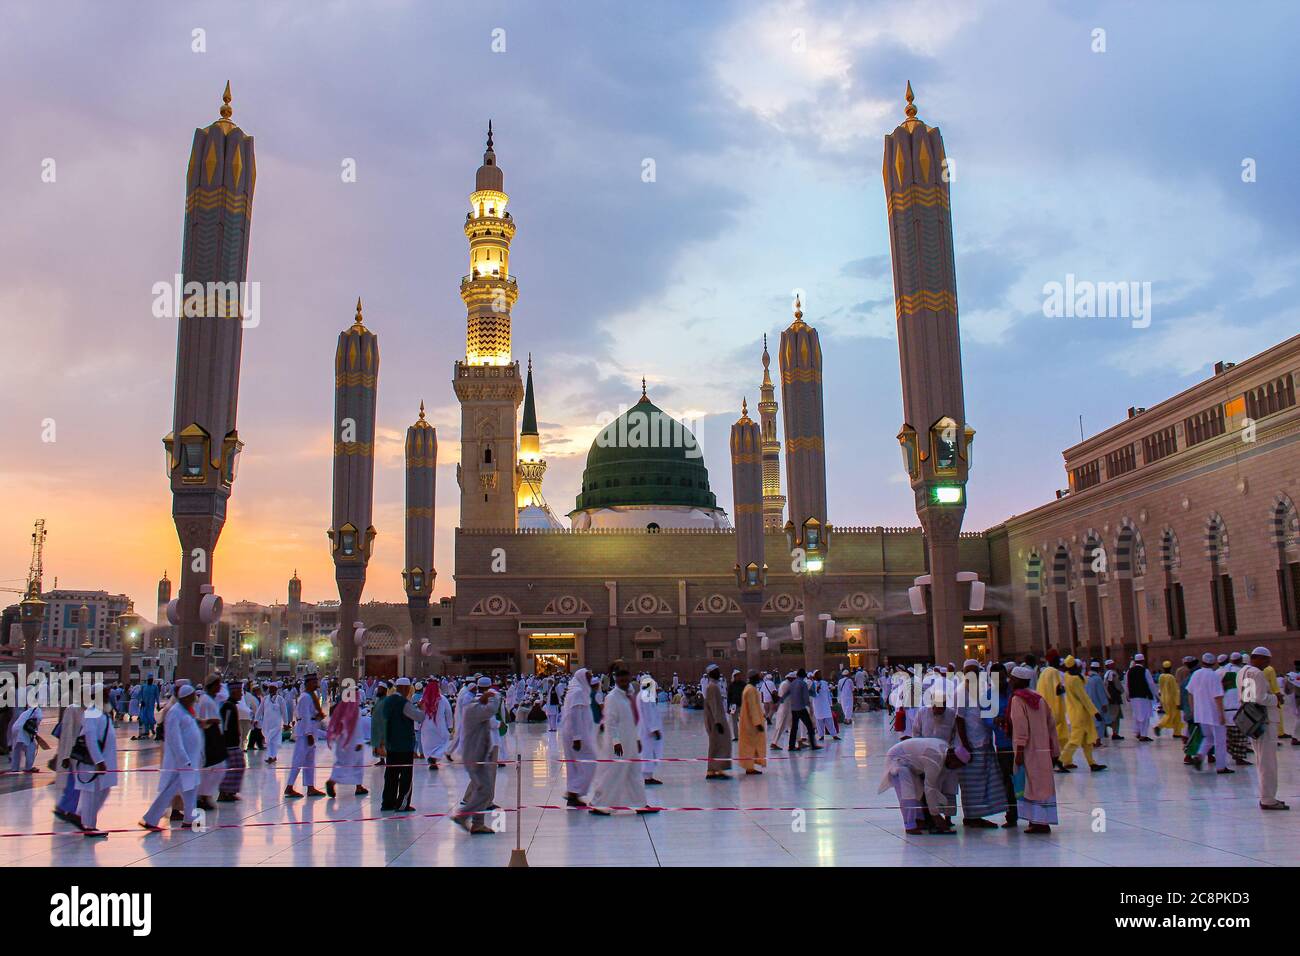 Medina / Saudi Arabia - 16 Sep 2013: Prophet Mohammed Mosque , Al Masjid an Nabawi - Umra and Hajj Journey at Muslim`s holy lands' Stock Photo